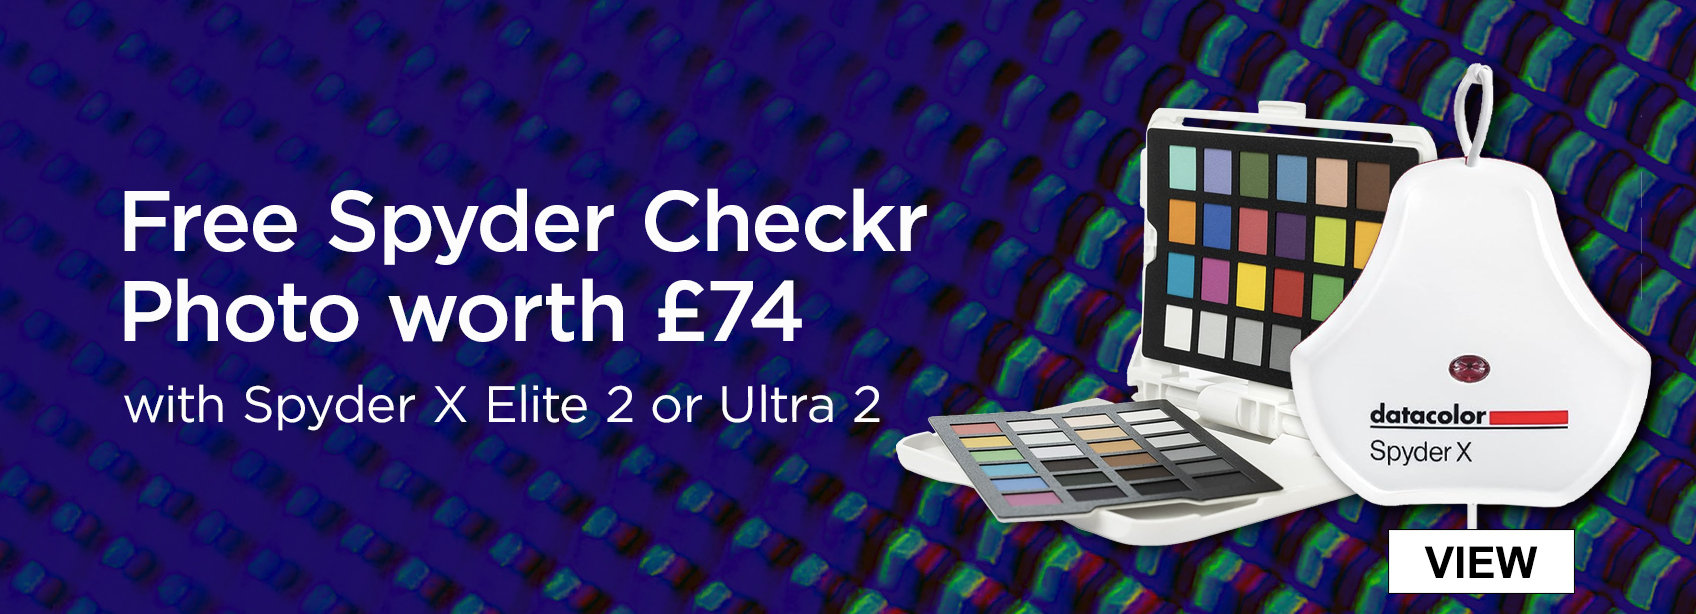 Free Spyder checkr photo worth £74, with Spyder X Elite 2 or Ultra 2